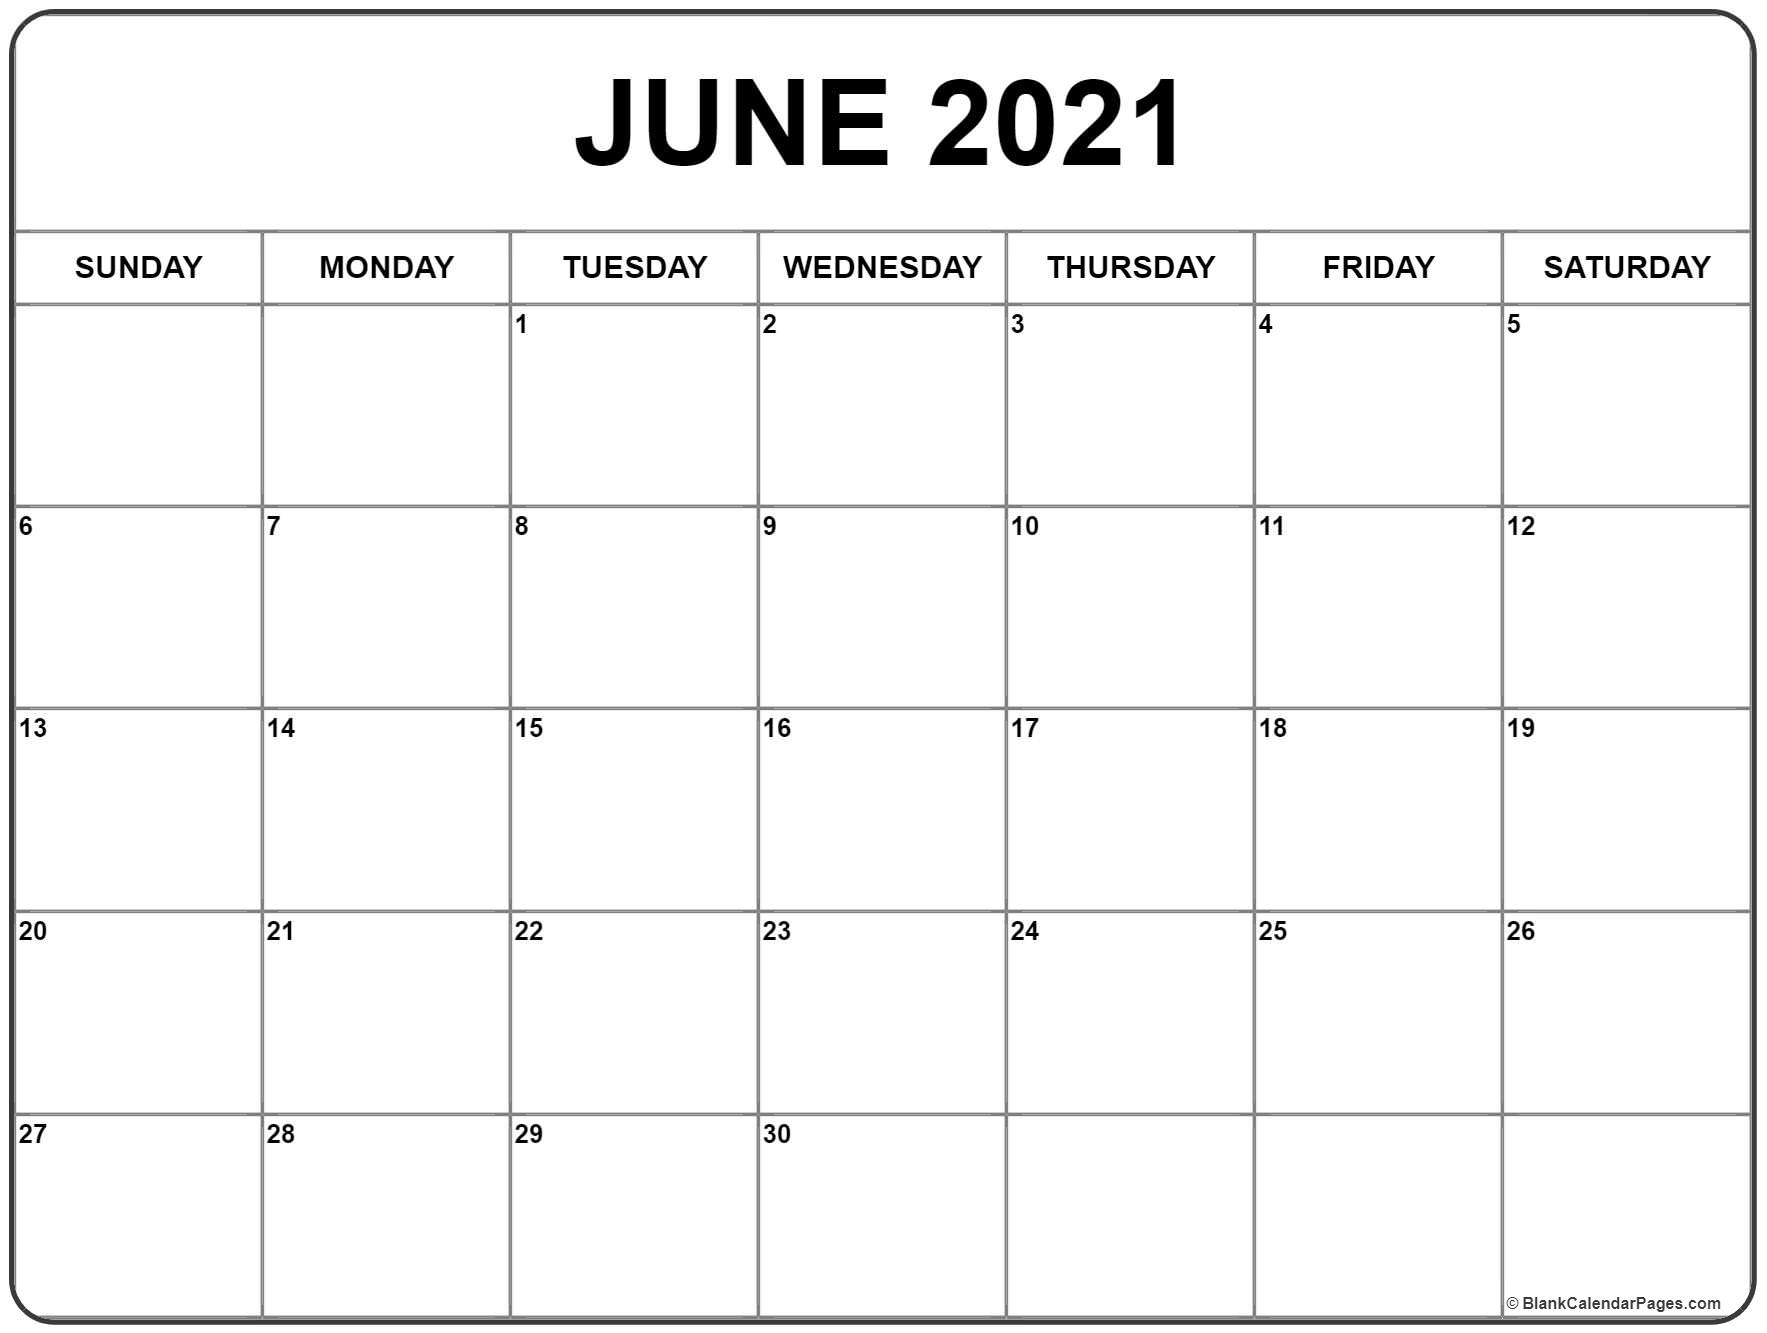 June 2021 calendar